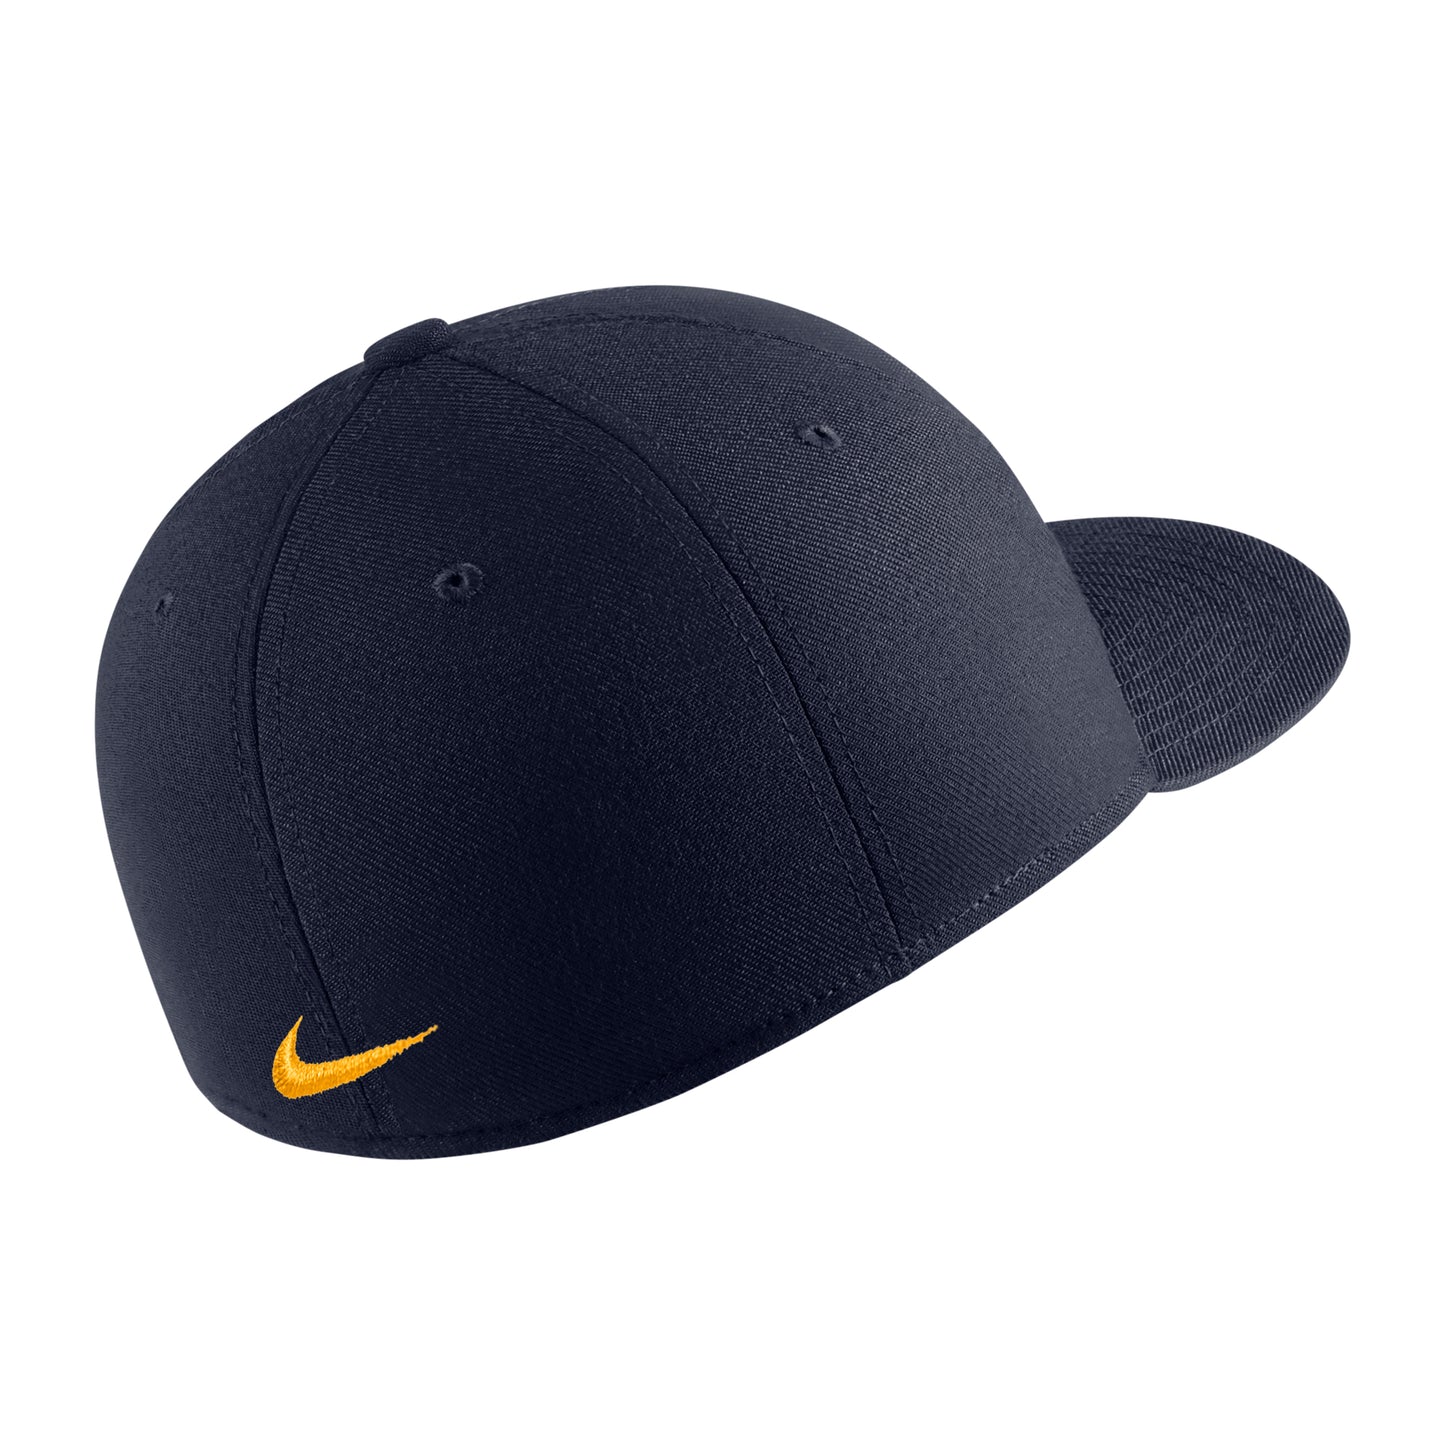 U.C. Berkeley Cal embroidered Swoosh flex/stretch fit hat-Navy-Shop College Wear